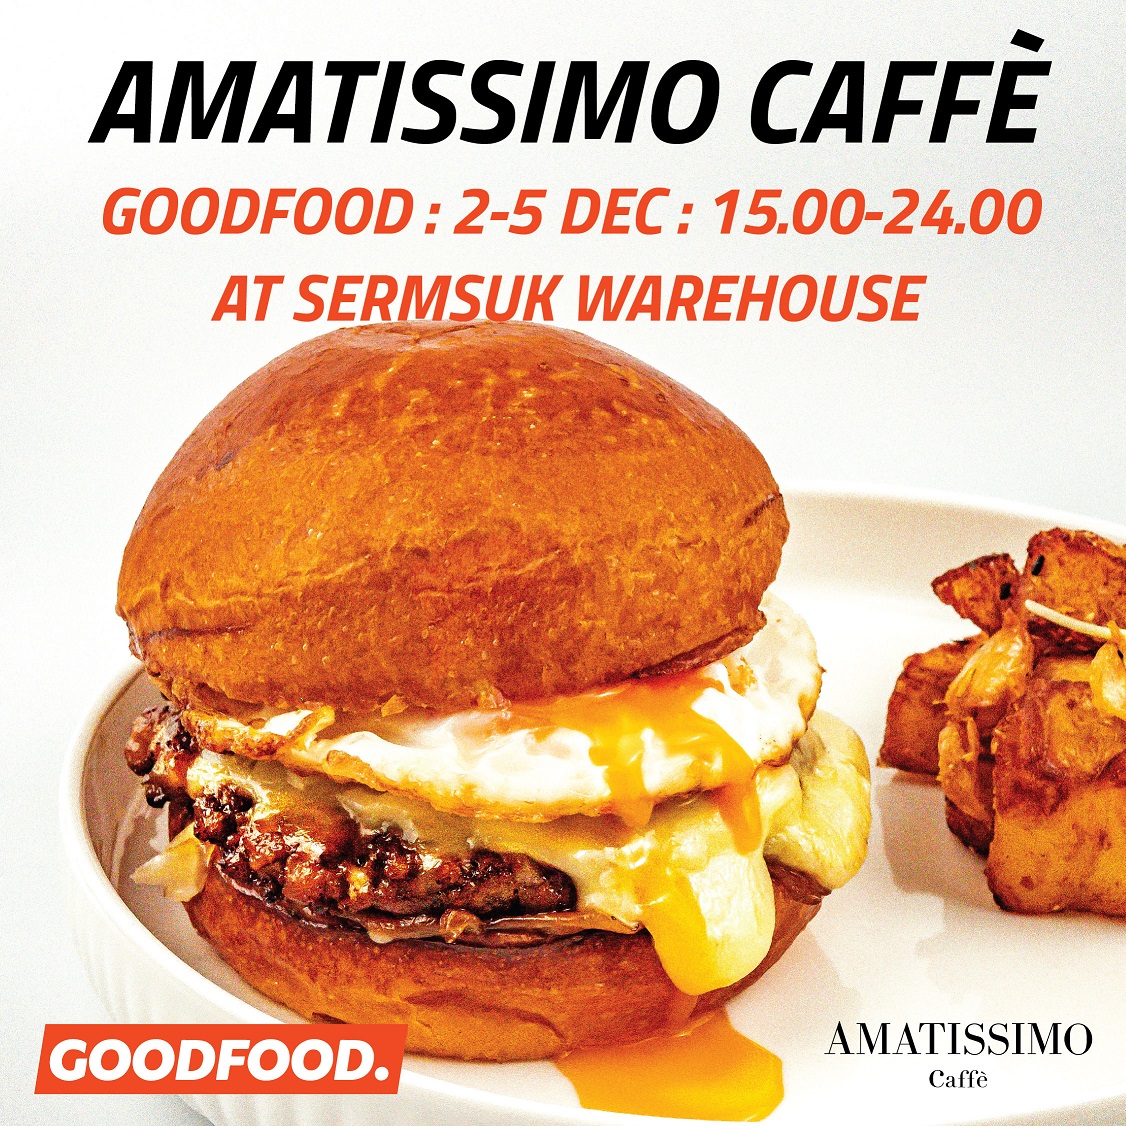 AMATISSIMO Caffé at GOODFOOD FESTIVAL